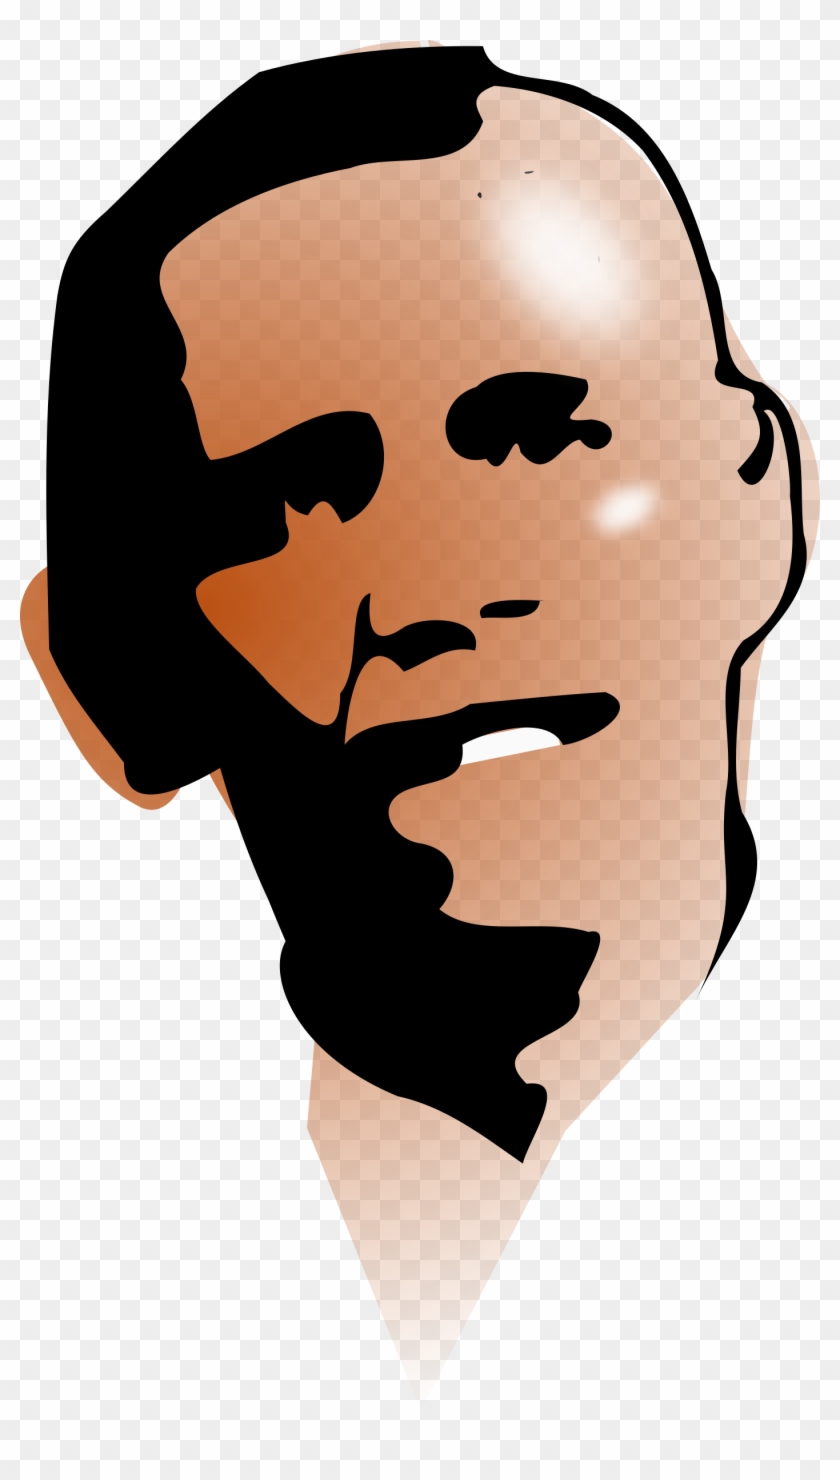 President Of The United States Barack Obama Clip Art - President Of The United States Barack Obama Clip Art #781109